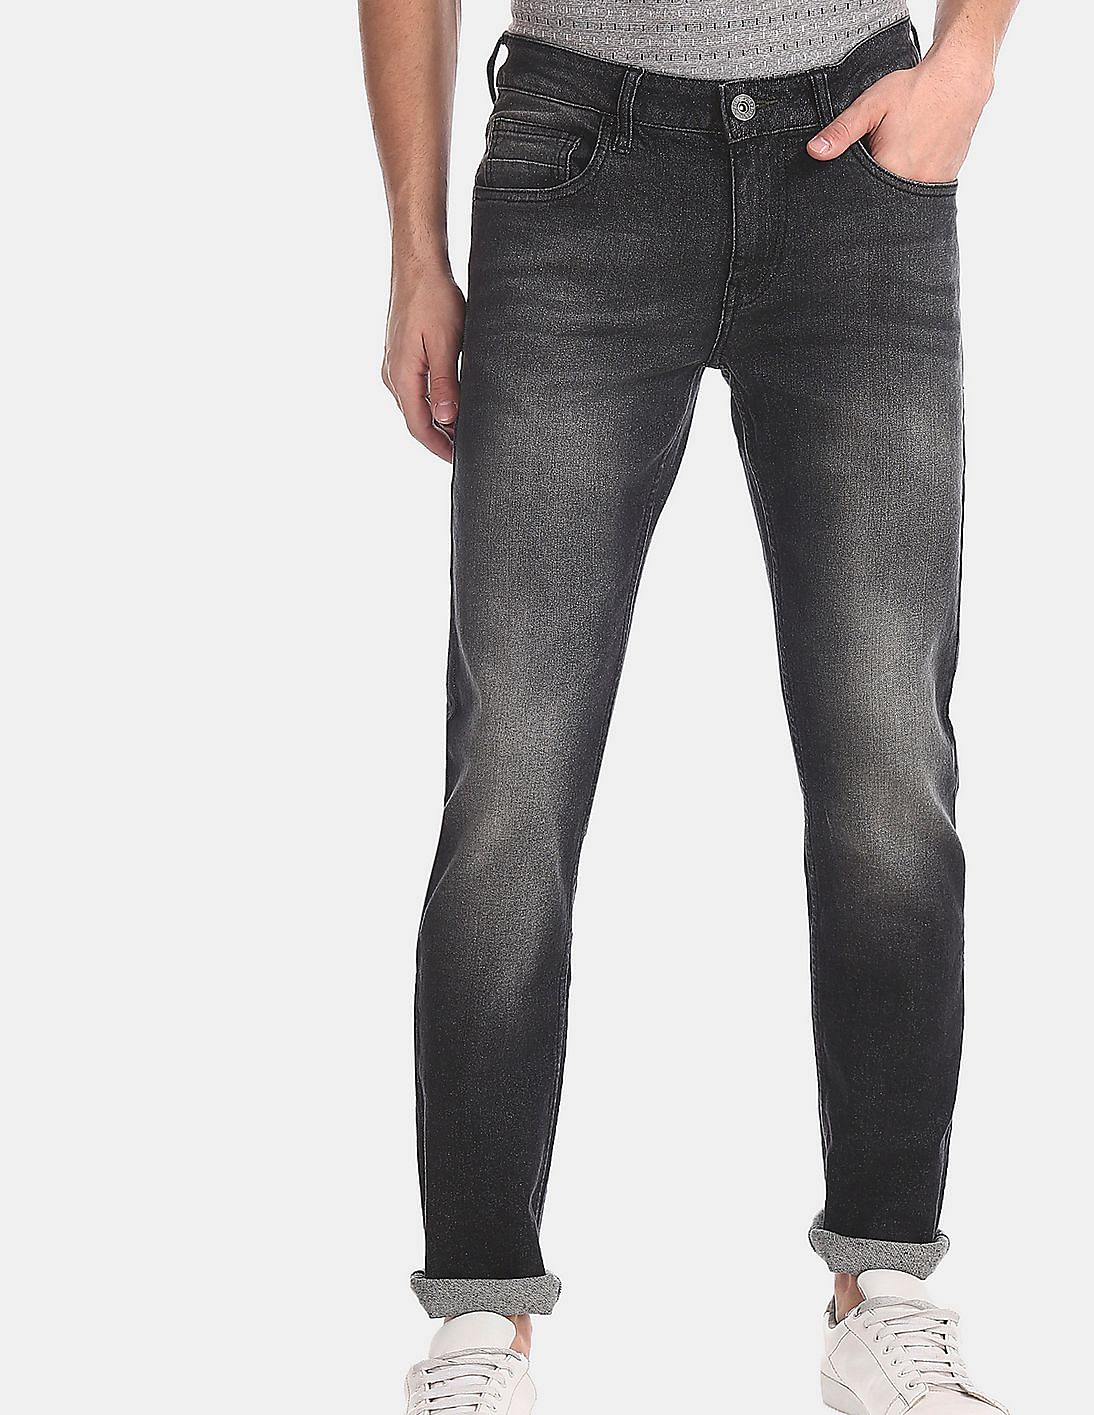 Buy Men Black Slim Fit Stone Wash Jeans online at NNNOW.com